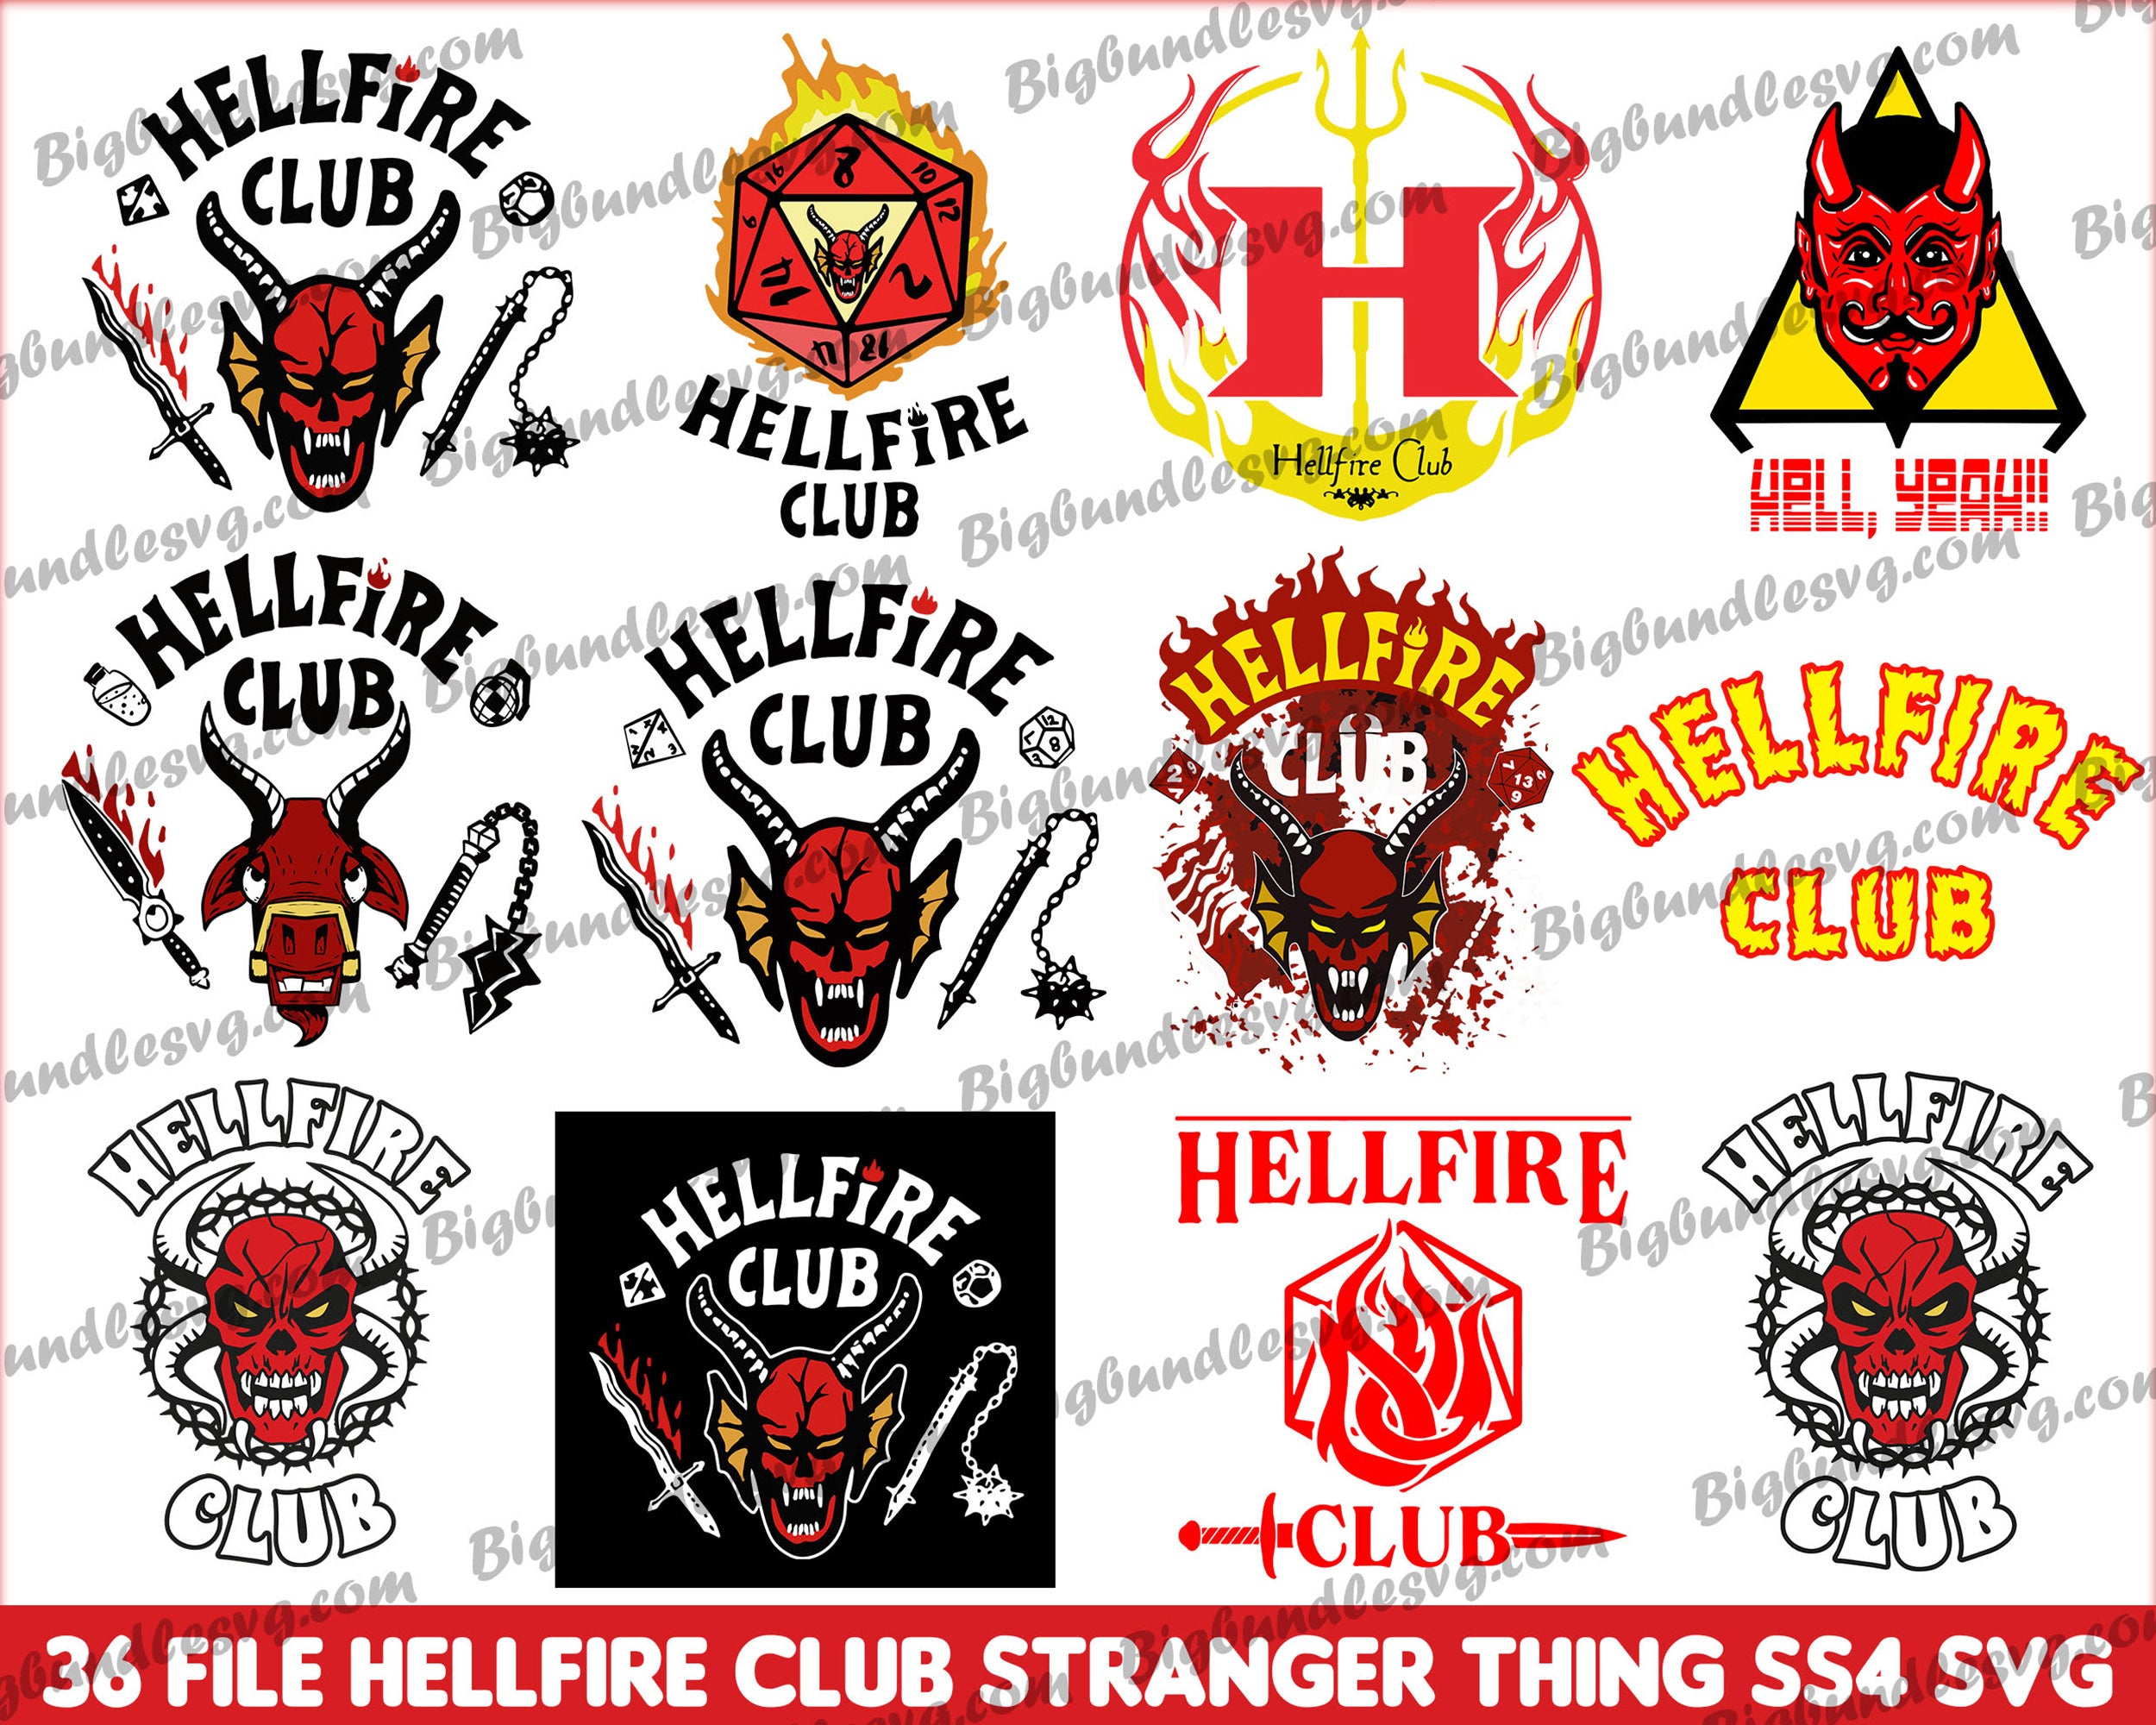 625+ Stranger Things SVG Bundle, Hellfire Club Svg - Digital download